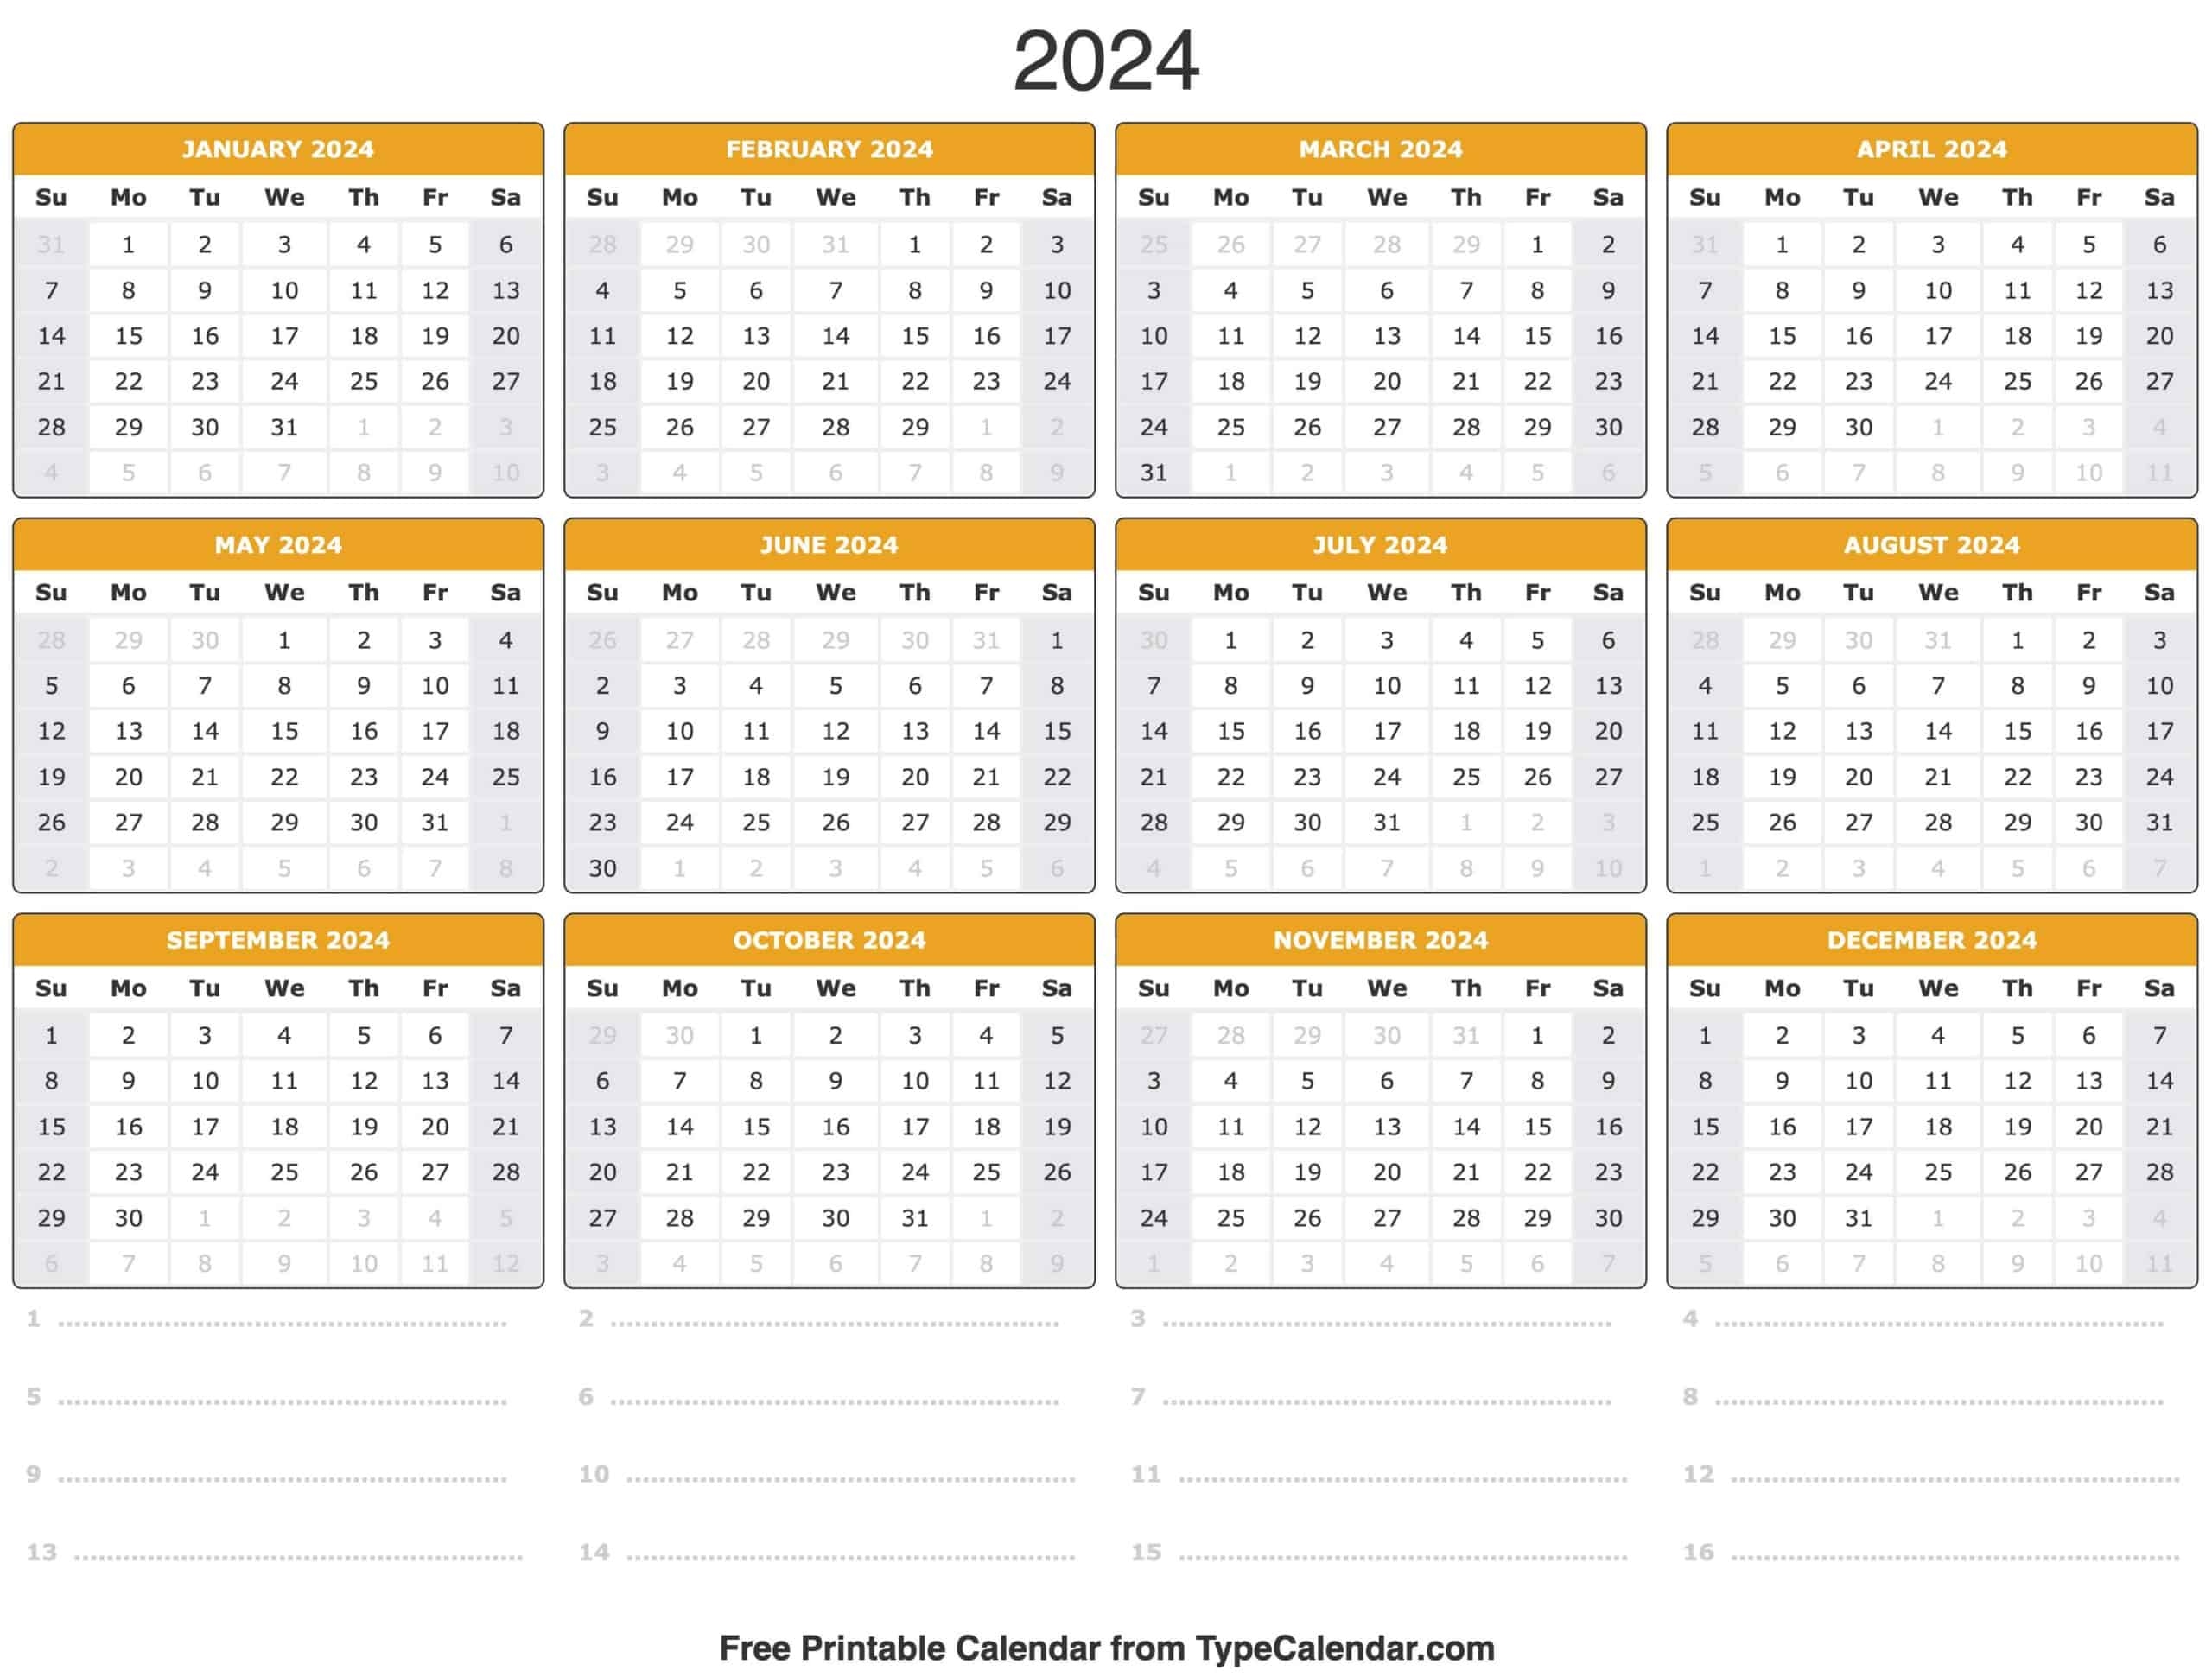 2024 Calendar: Free Printable Calendar With Holidays in Free Printable Calendar 2024 Time And Date